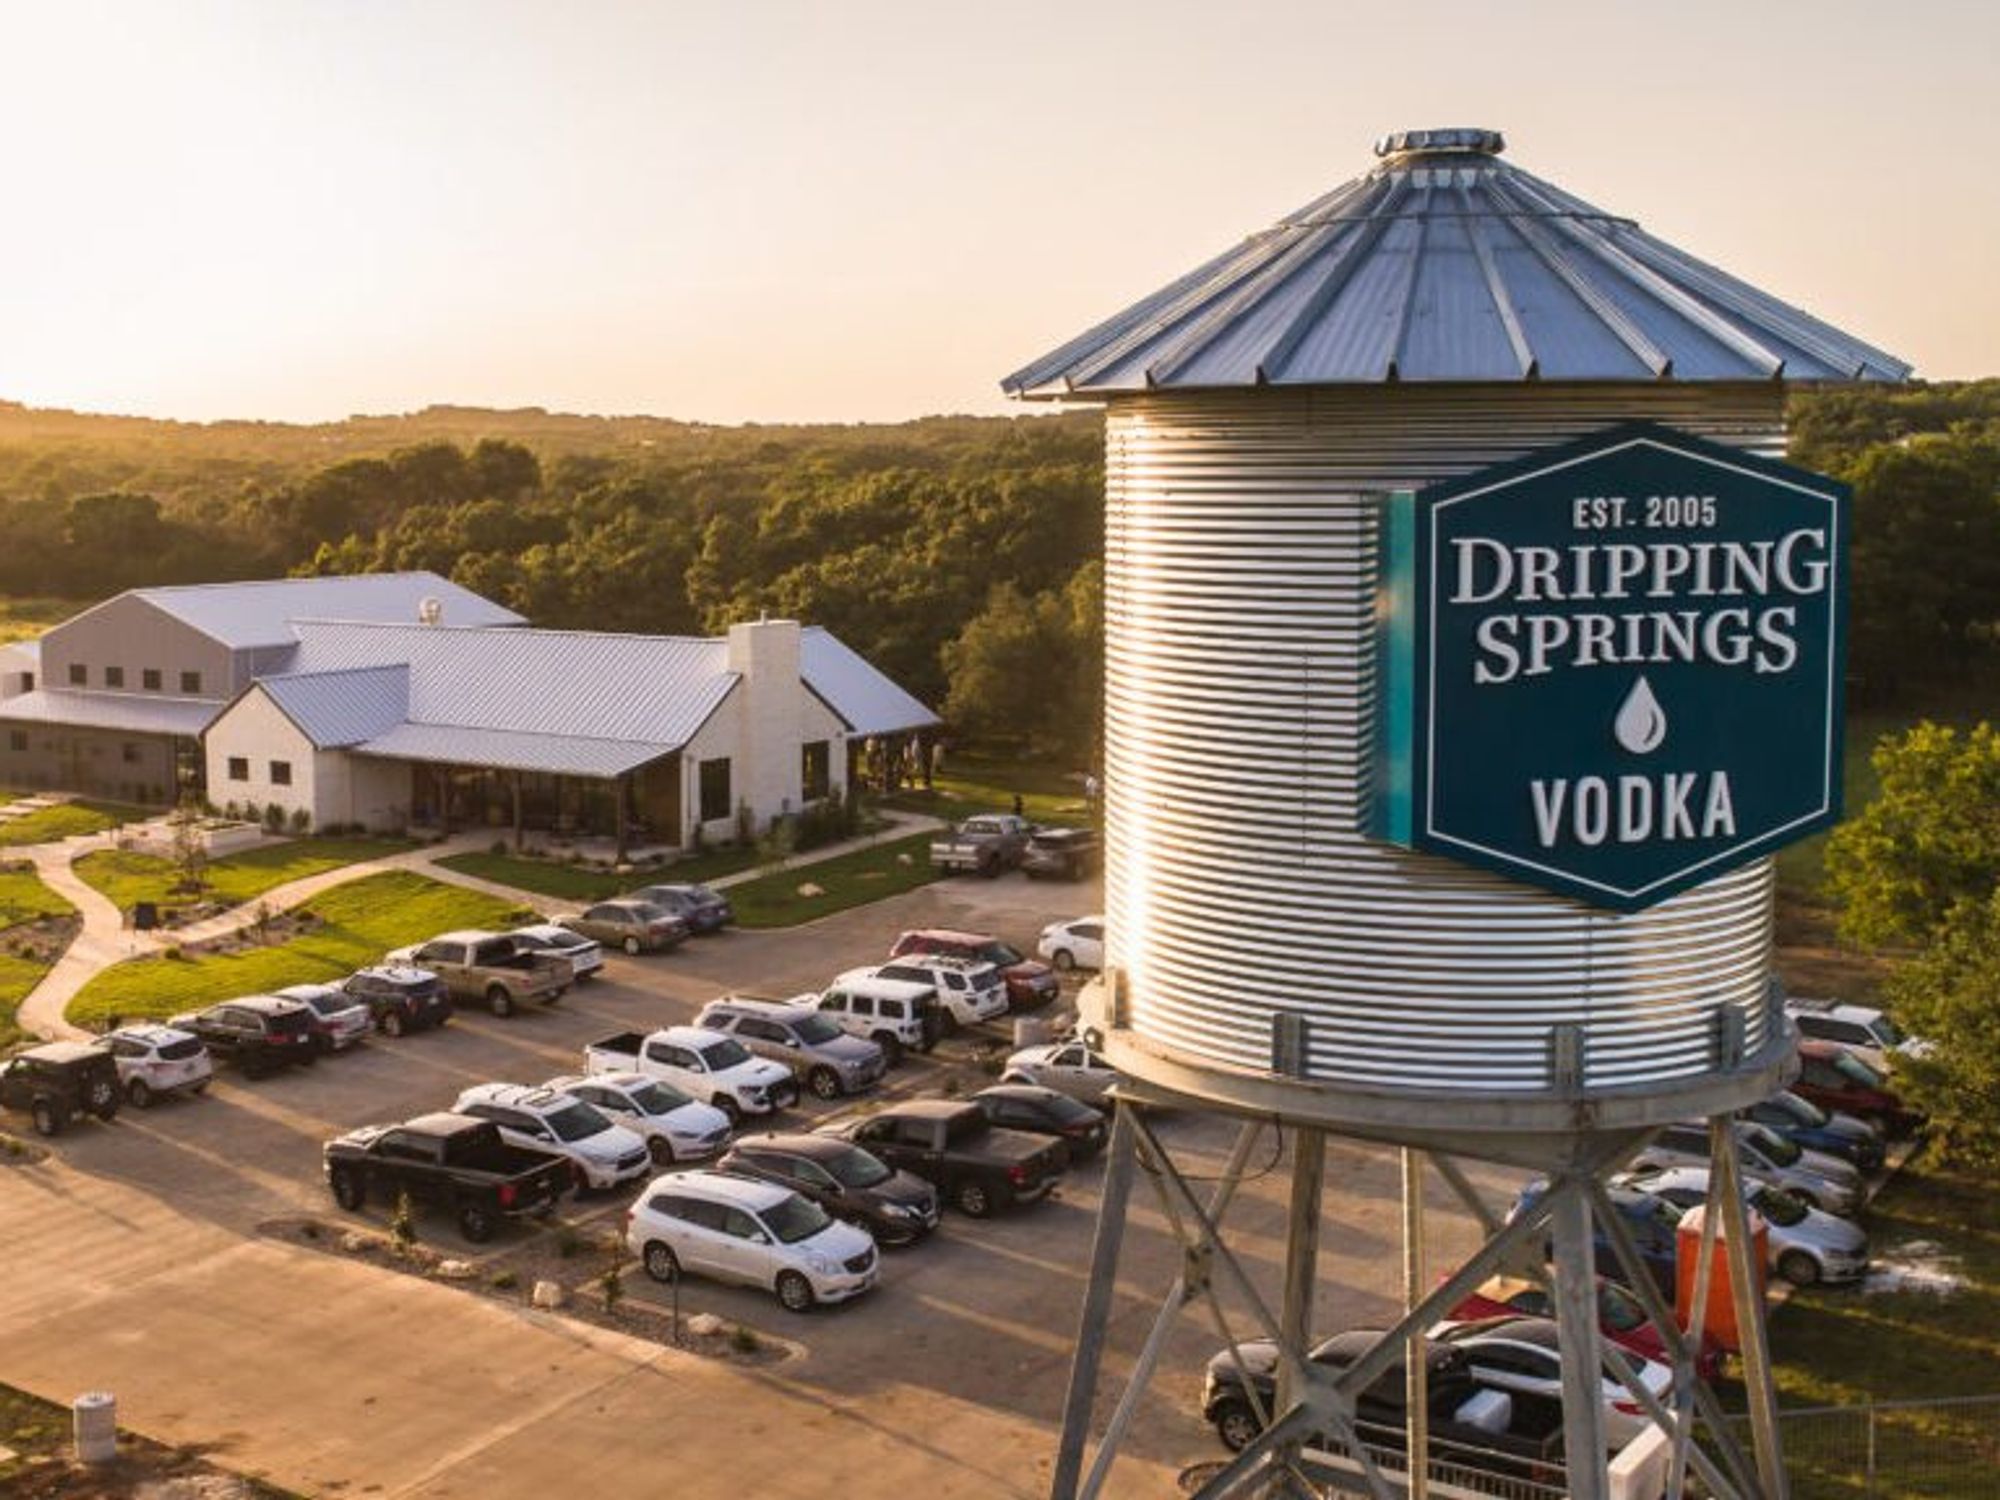 Dripping Springs, Dripping Springs Distilling, Dripping Springs Vodka